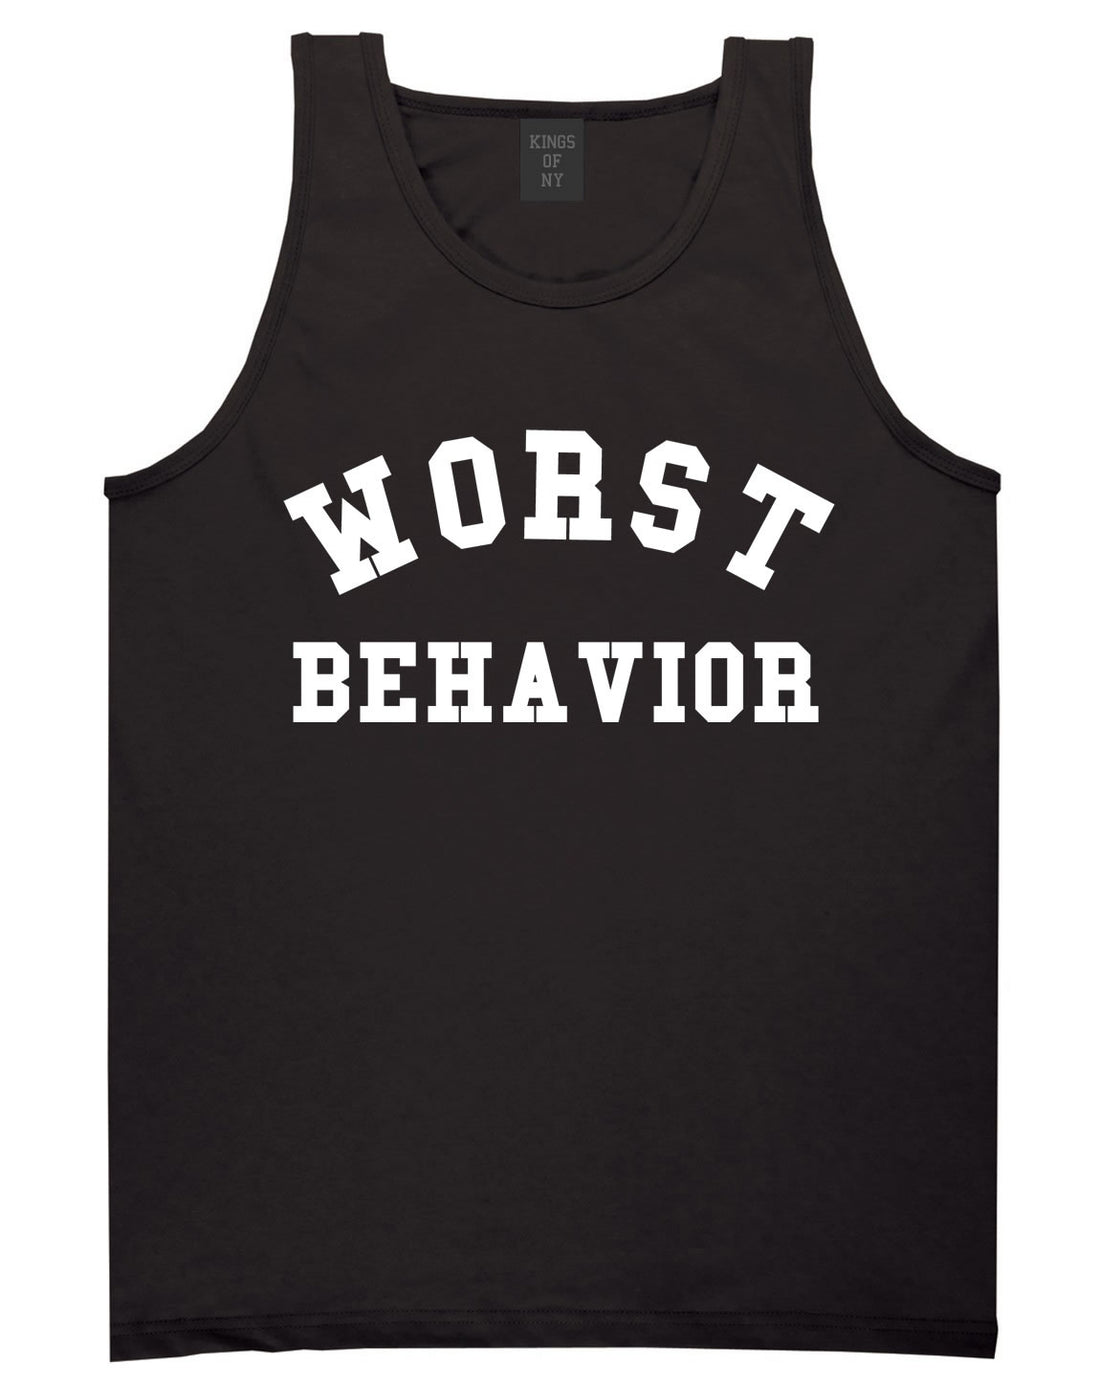 Worst Behavior Tank Top in Black by Kings Of NY